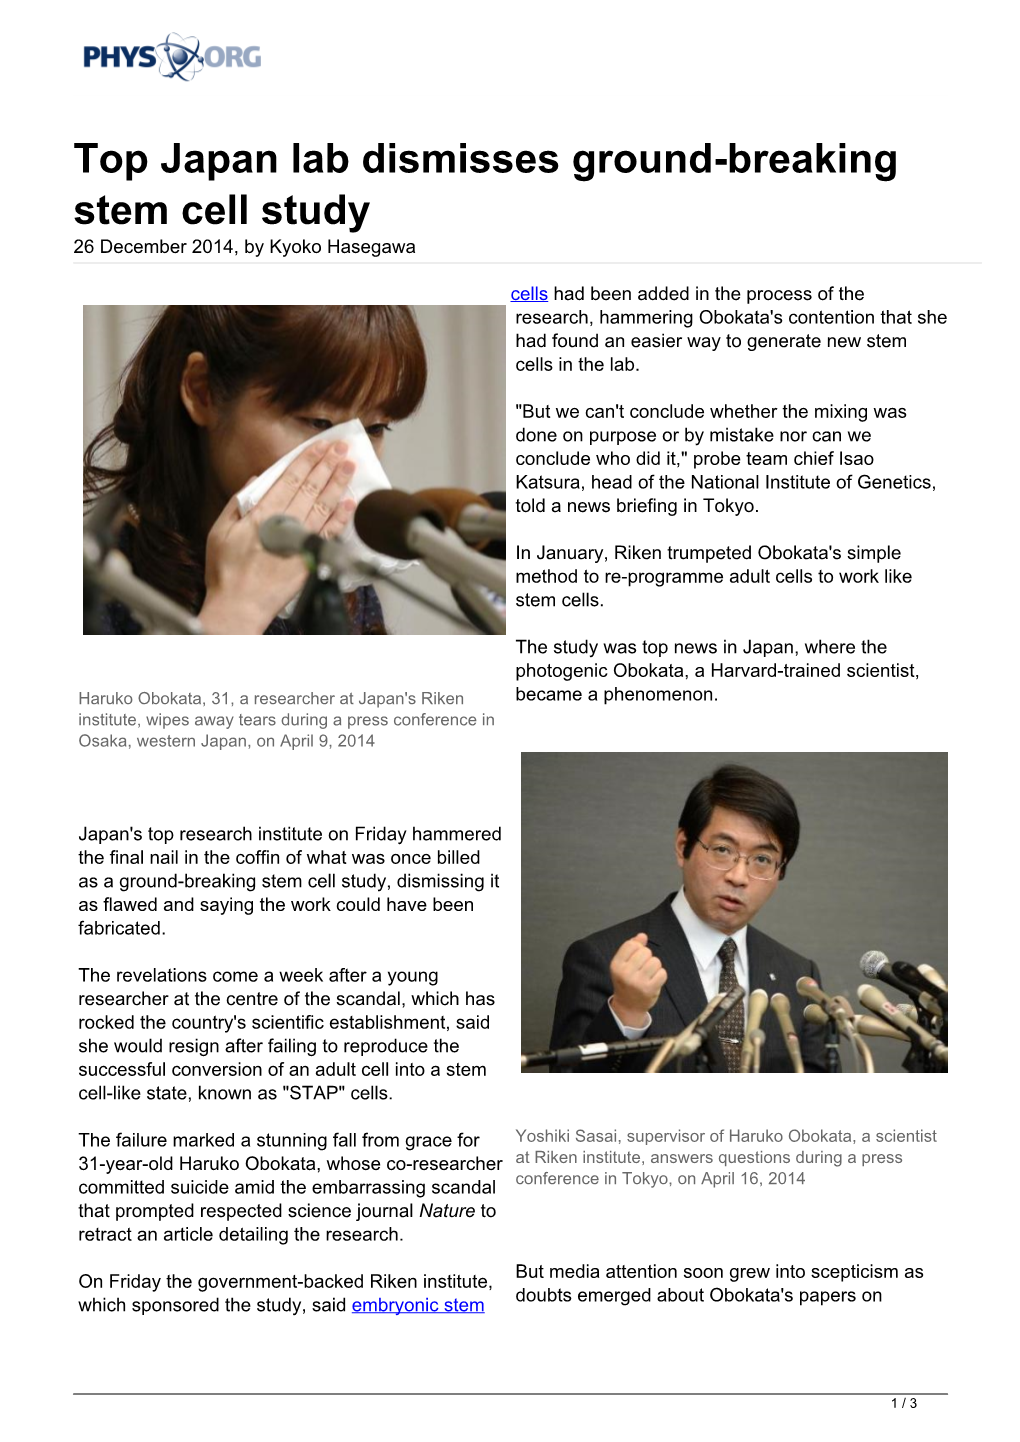 Top Japan Lab Dismisses Ground-Breaking Stem Cell Study 26 December 2014, by Kyoko Hasegawa